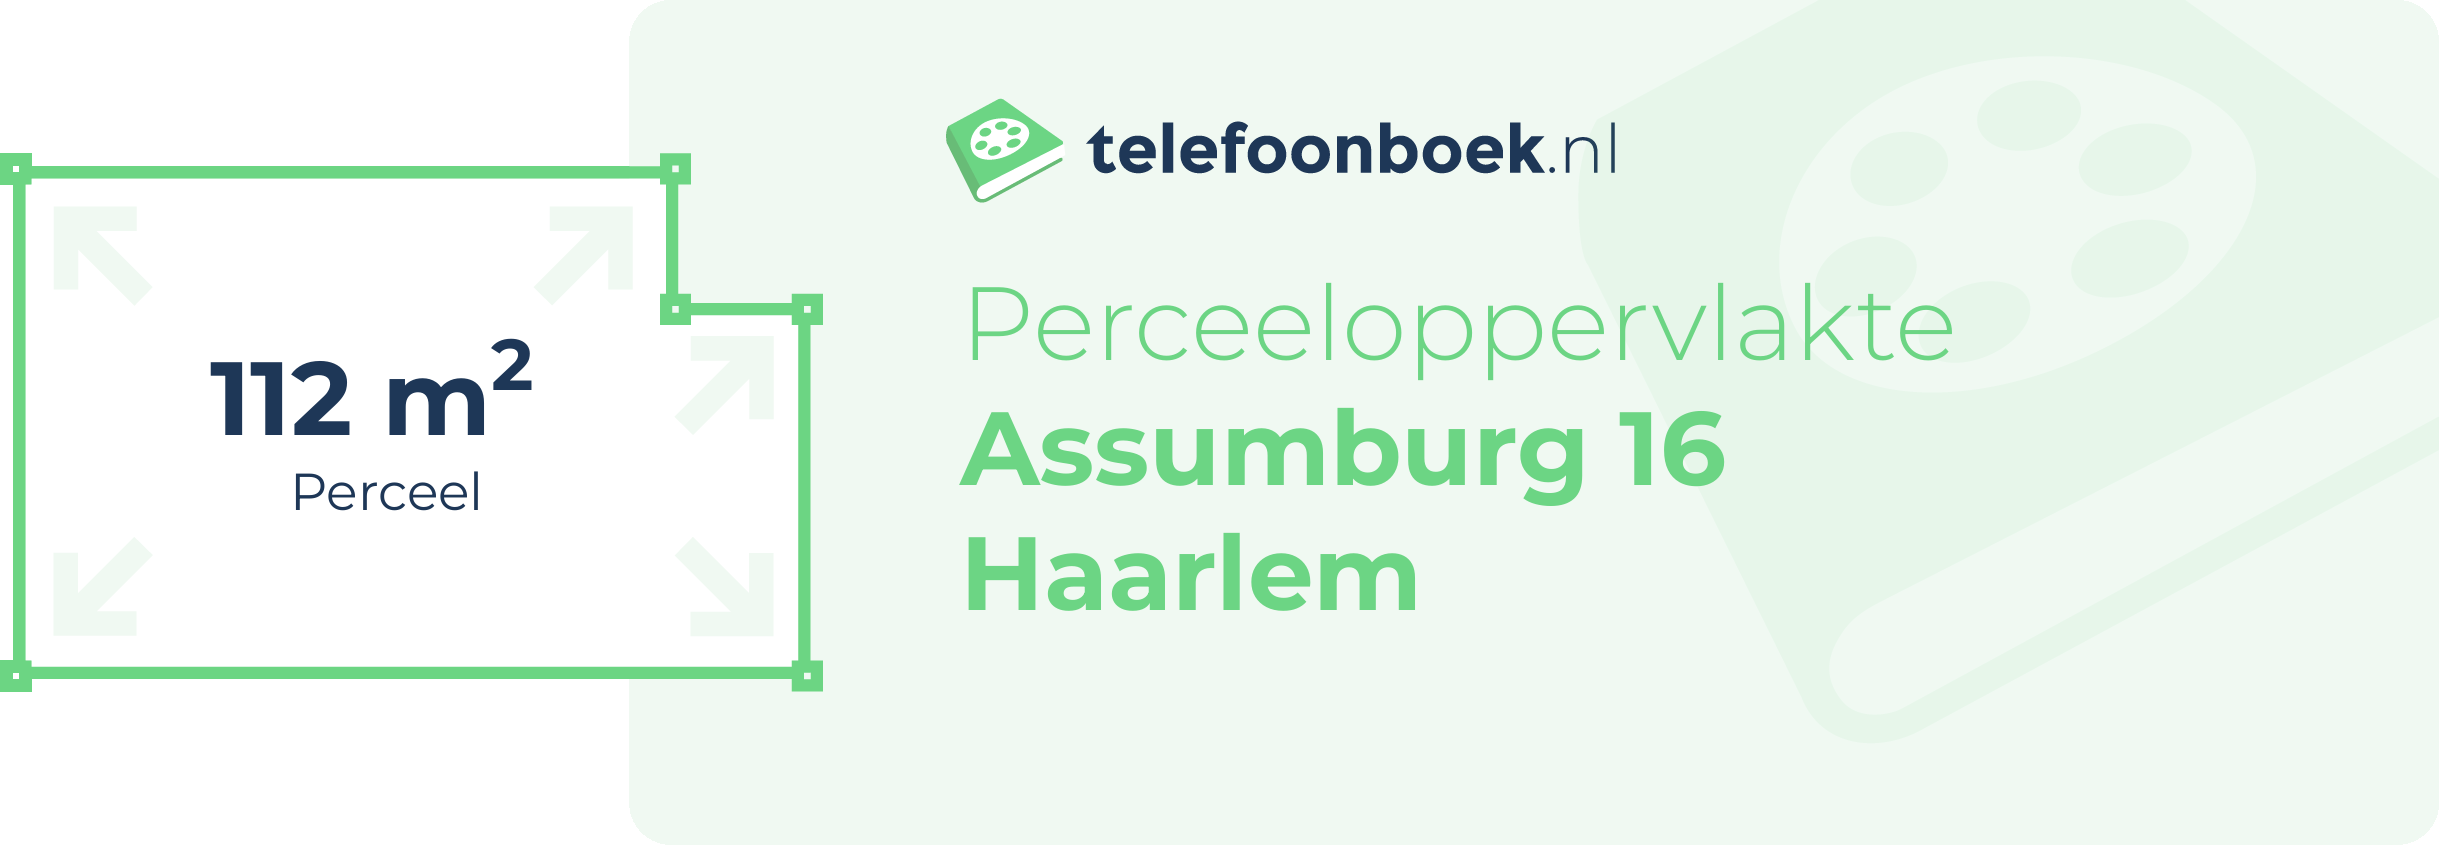 Perceeloppervlakte Assumburg 16 Haarlem